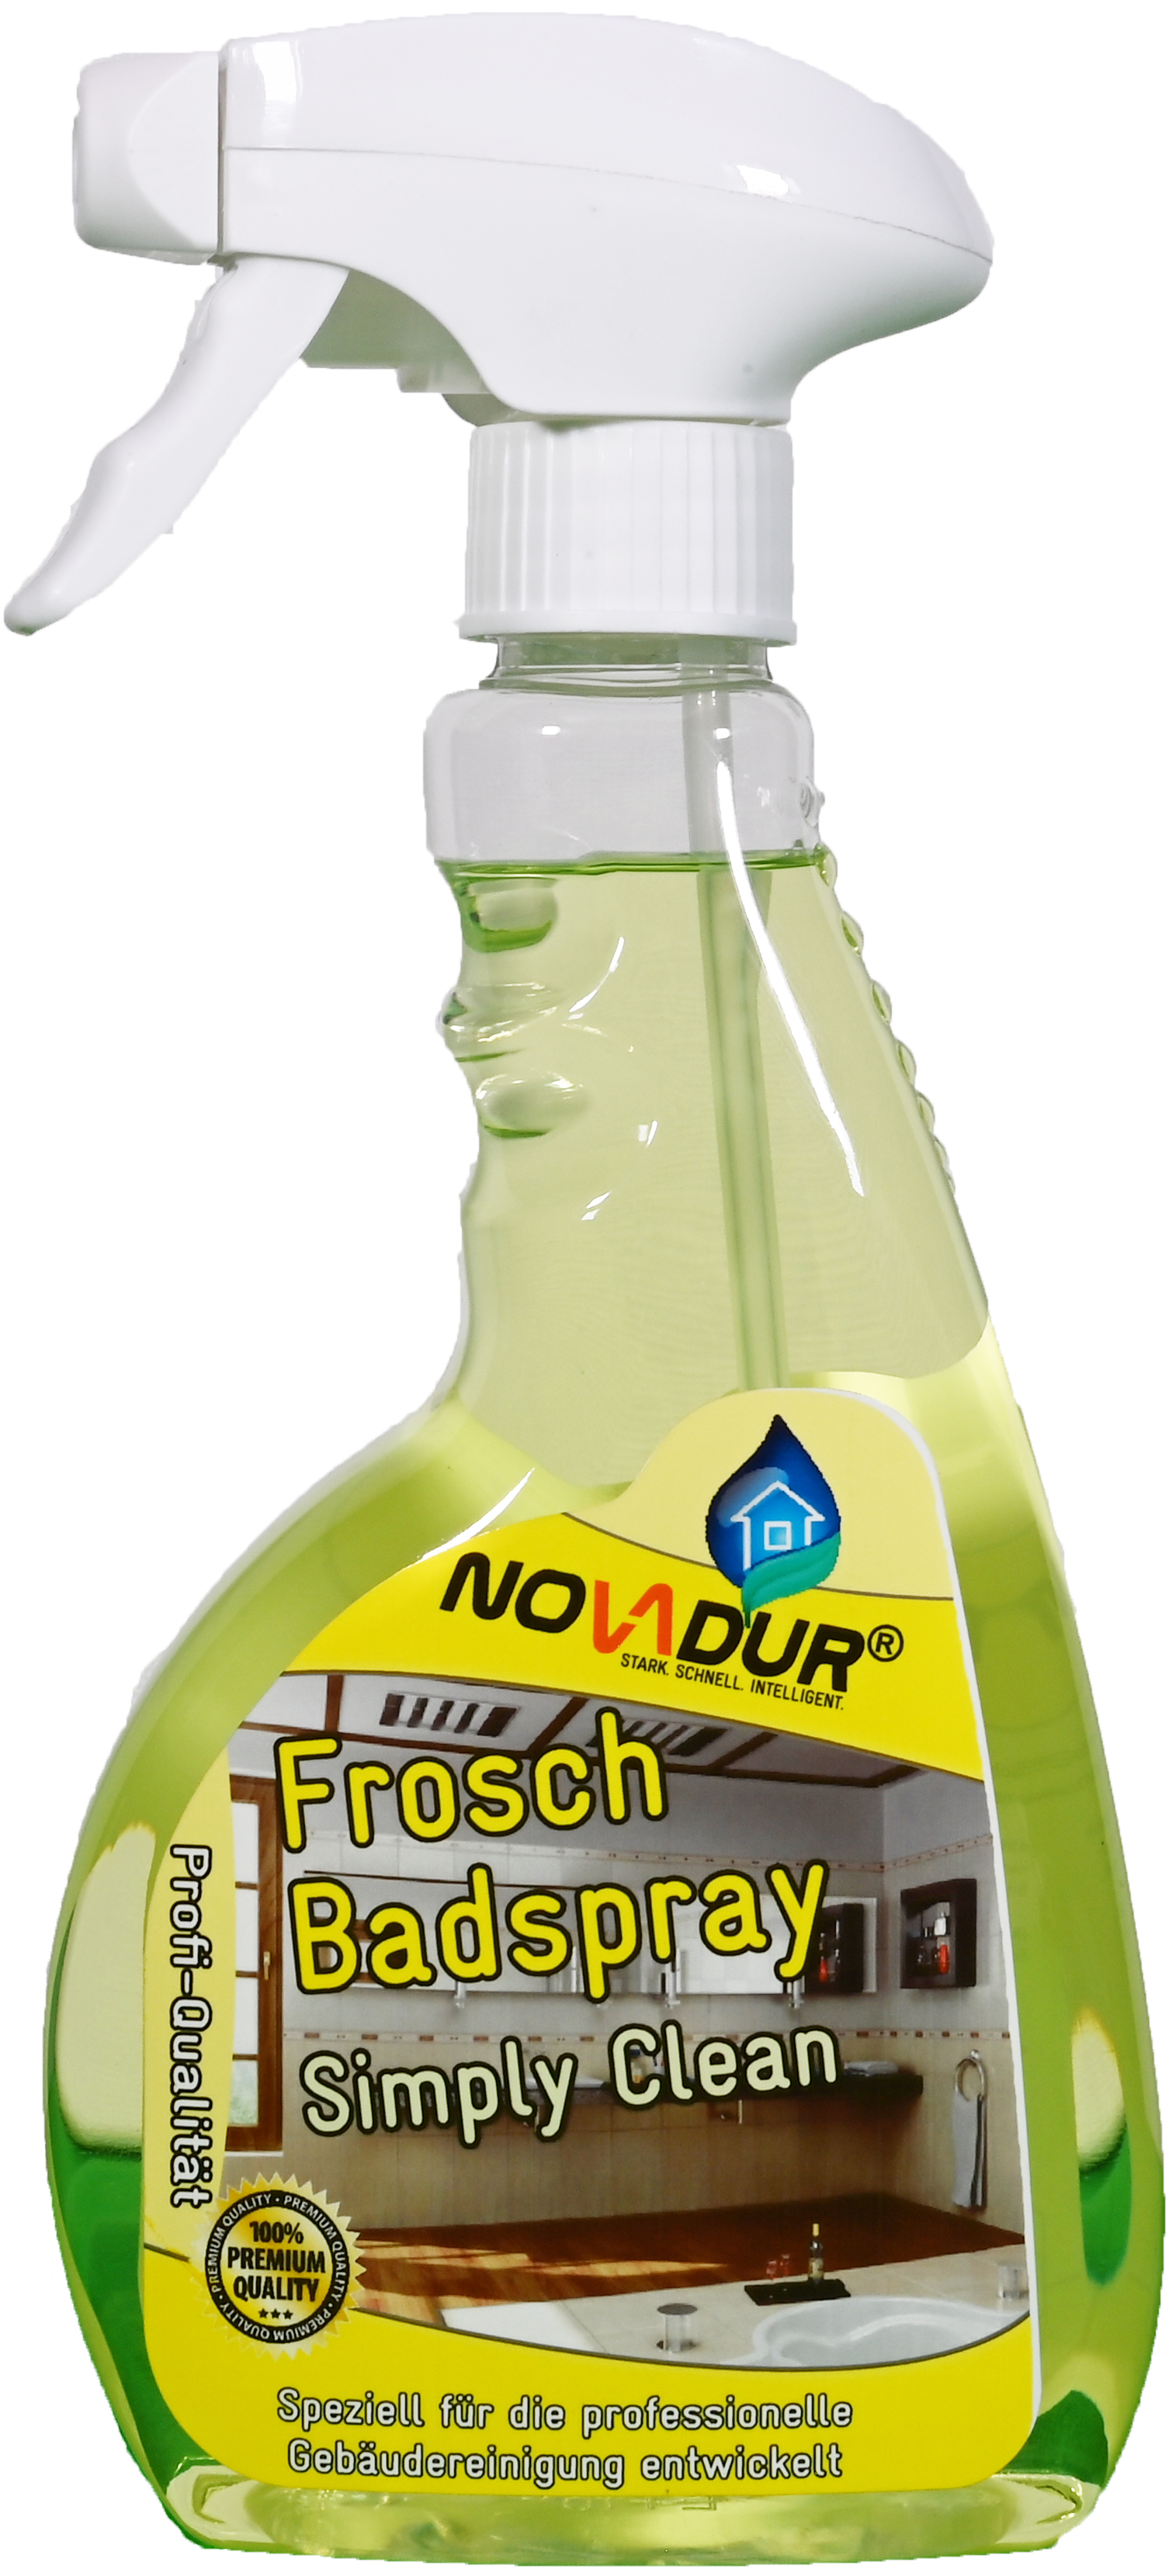 Frosch Badspray Simply Clean 